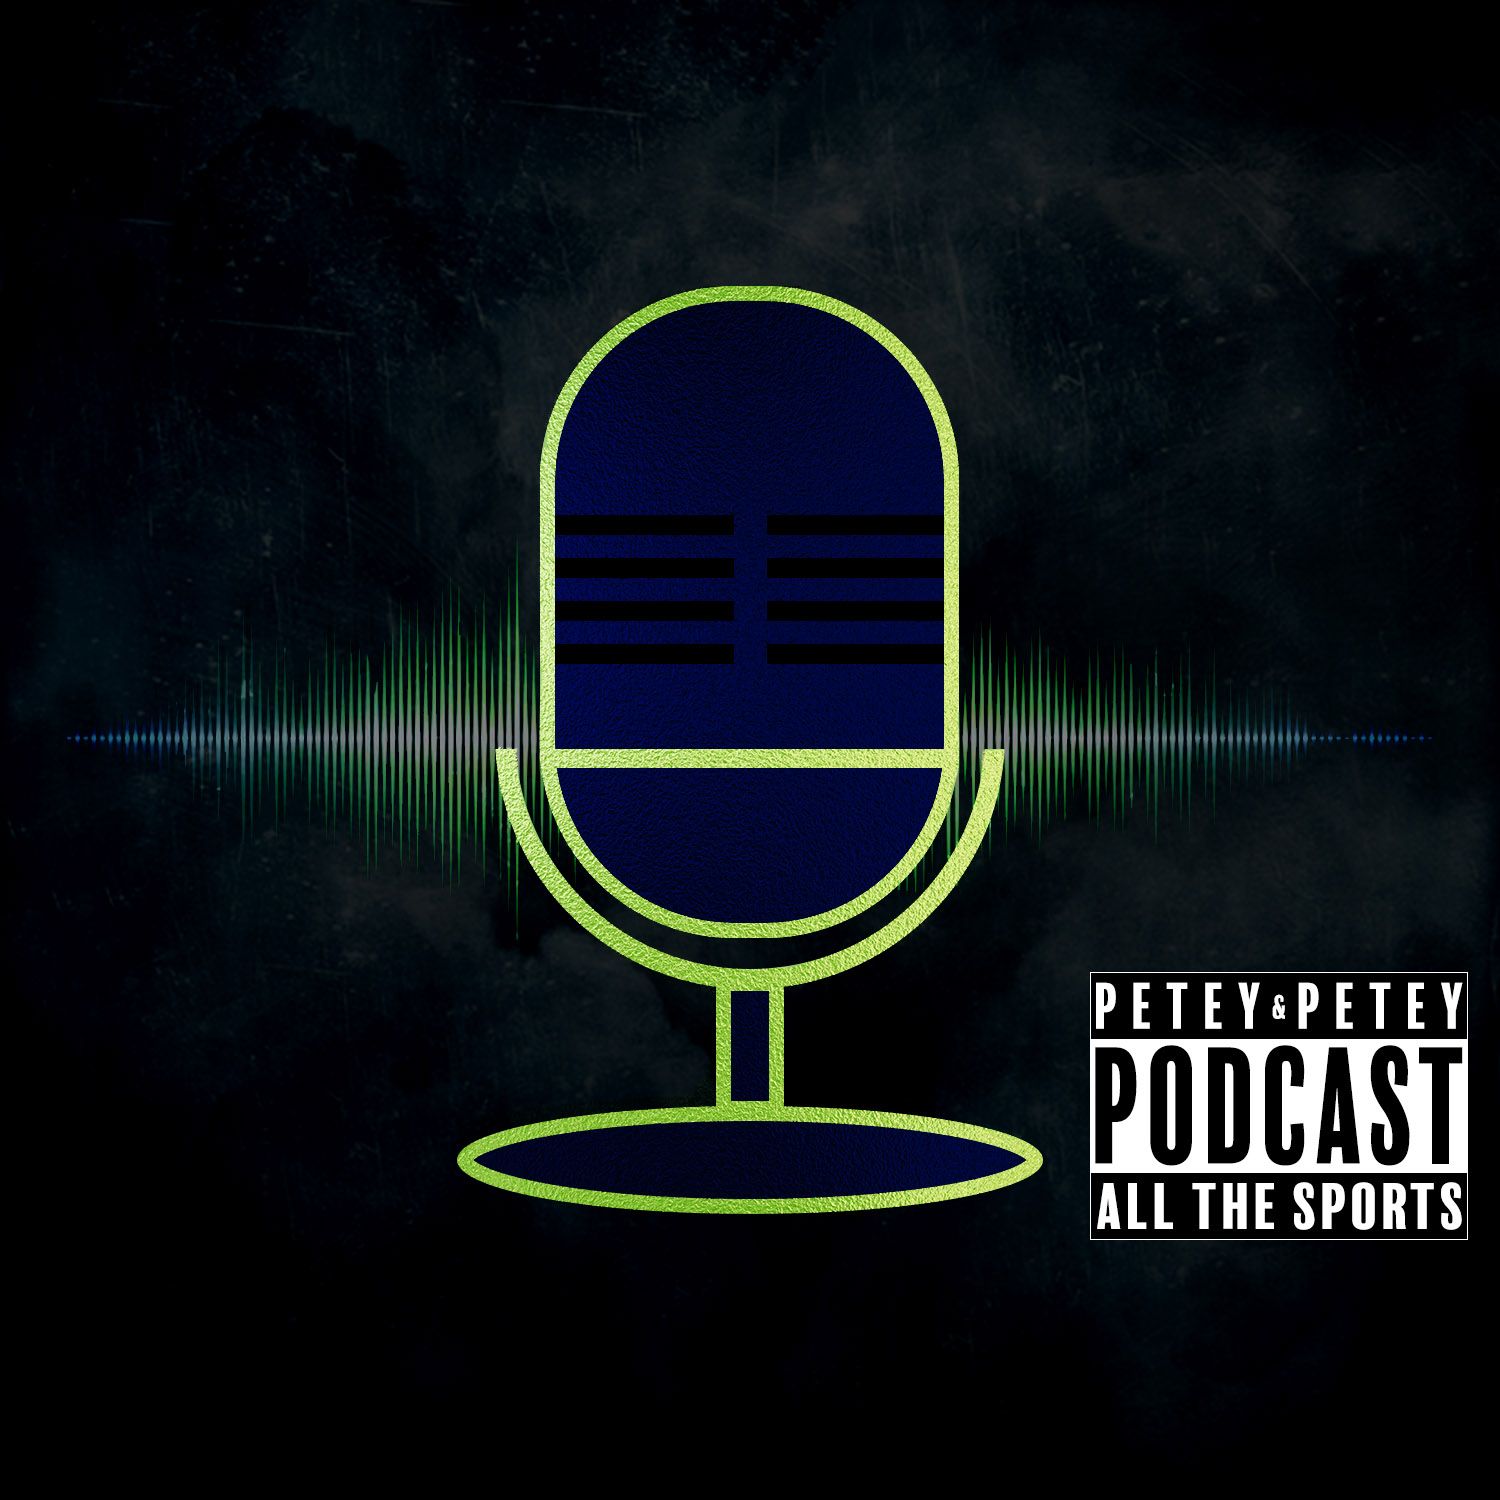 Petey & Petey Podcast